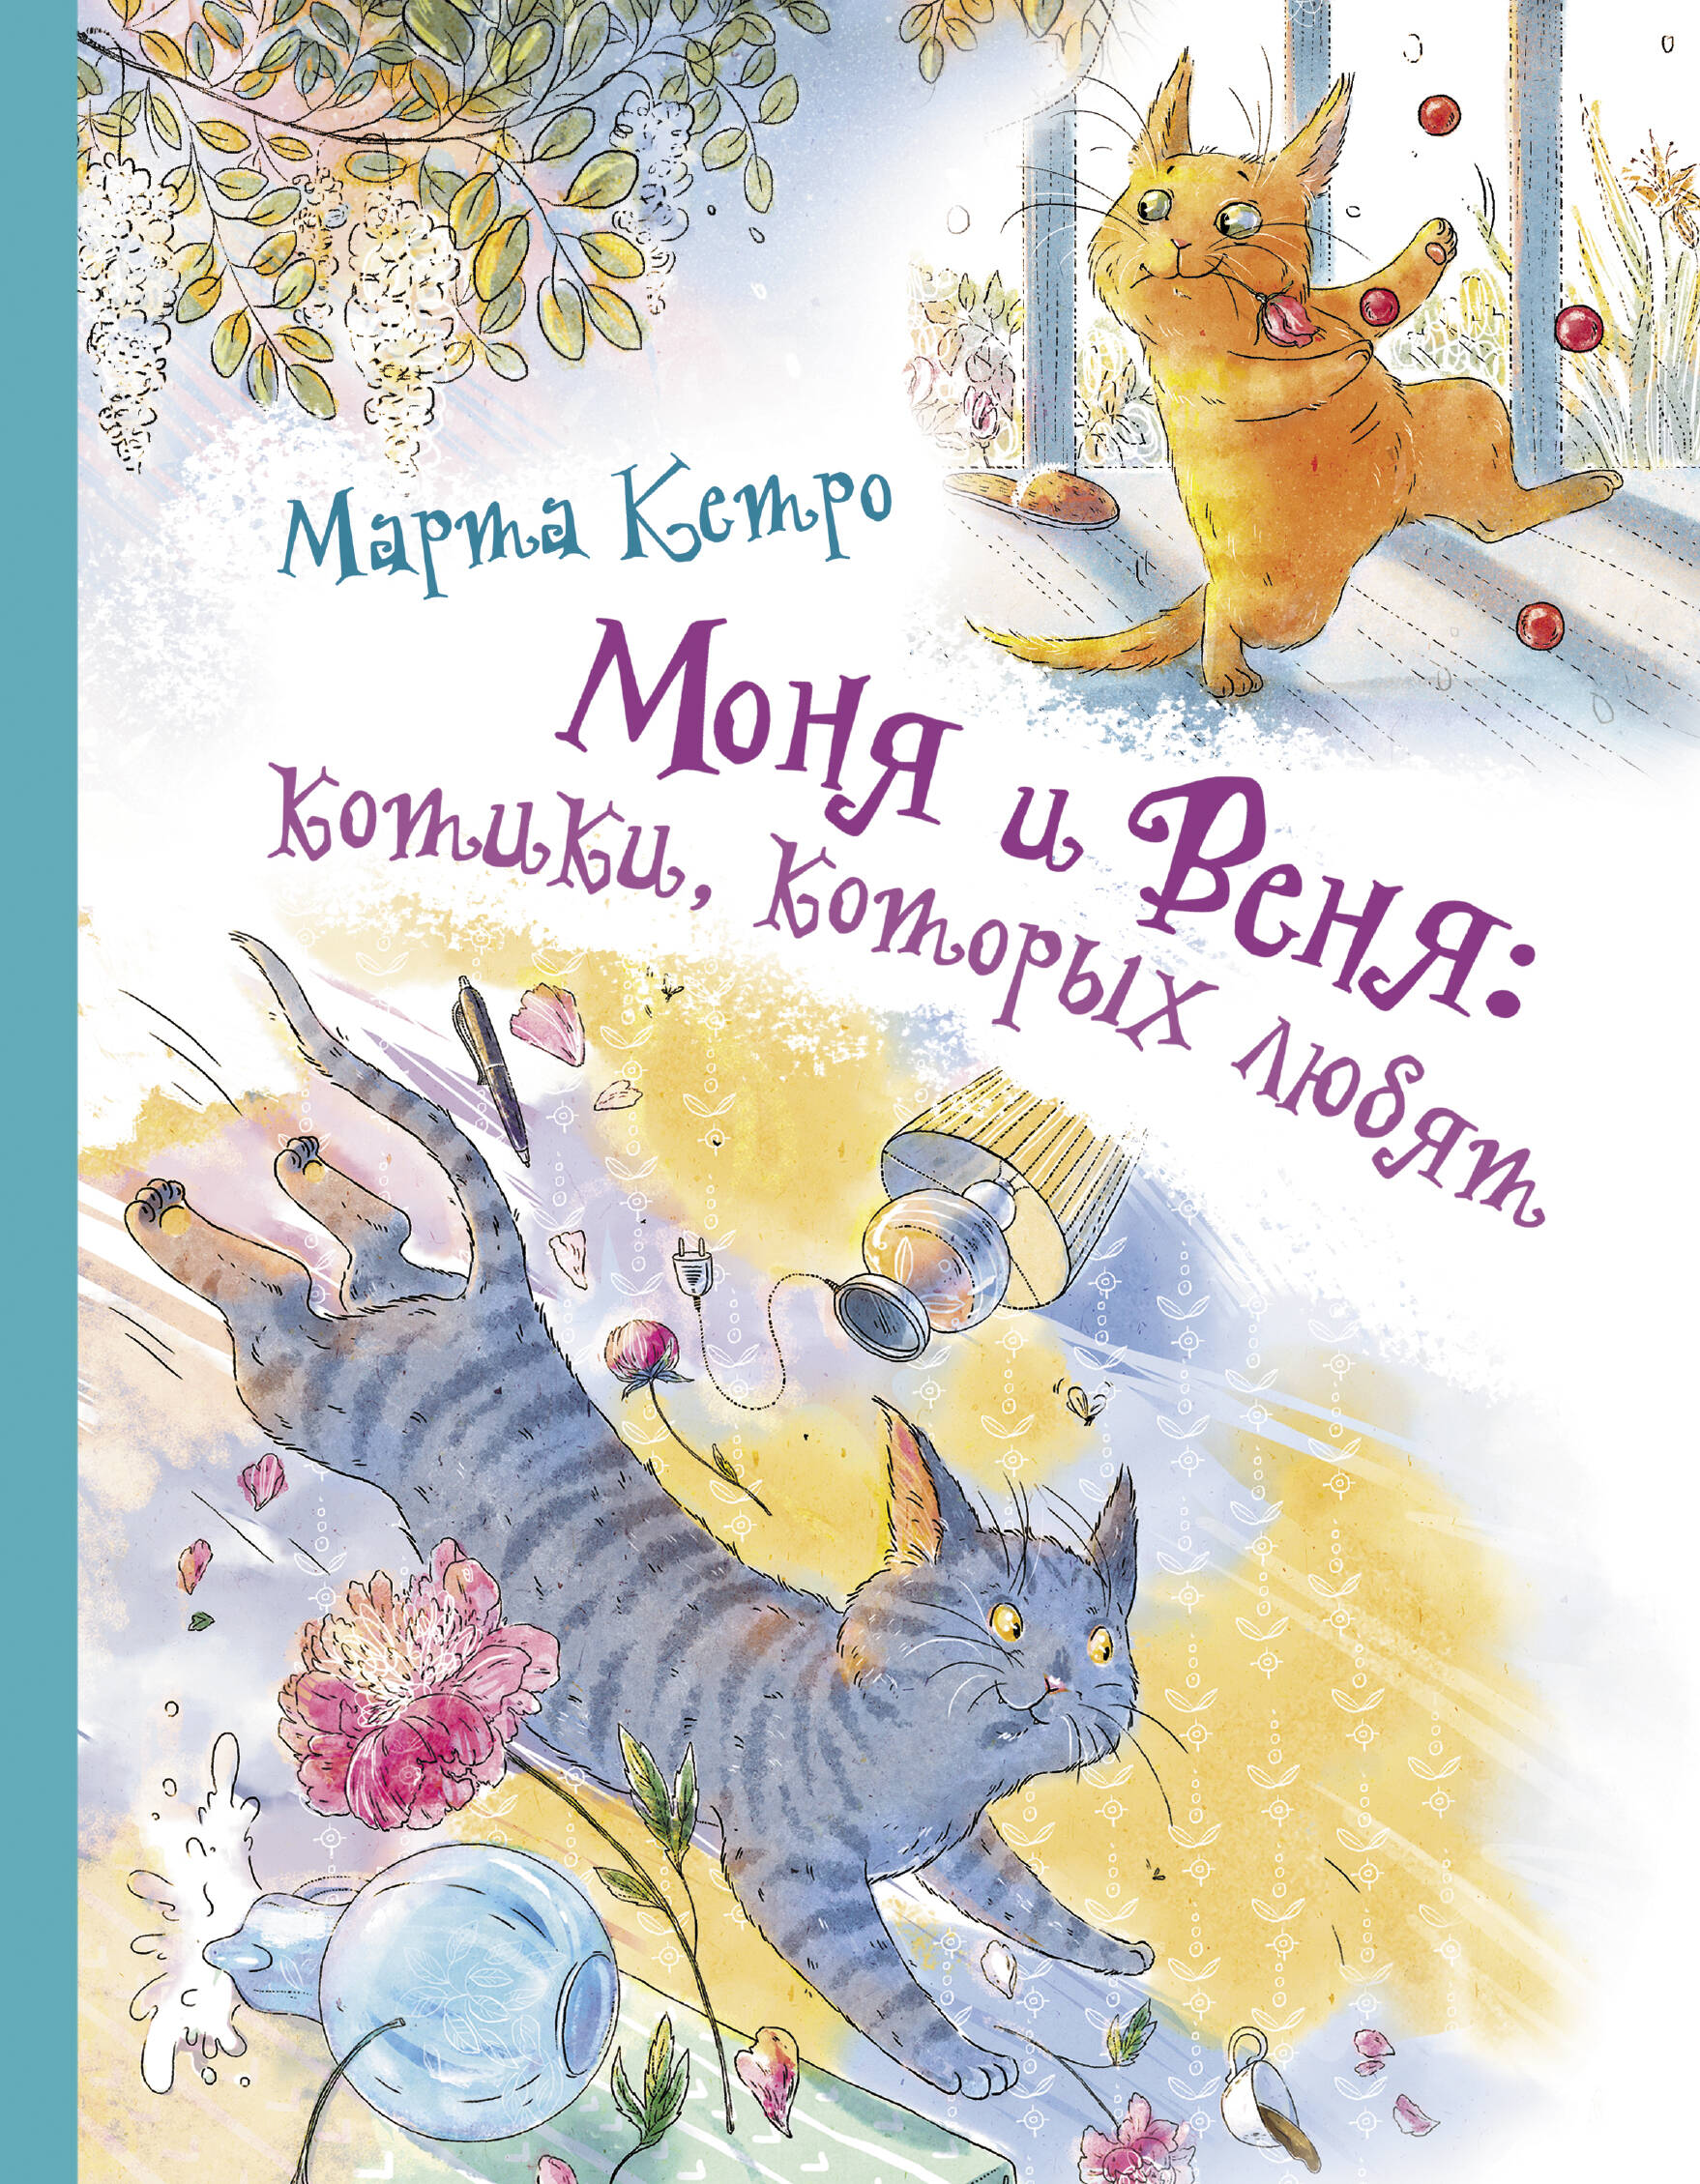 Кетро Марта - Моня и Веня: котики, которых любят